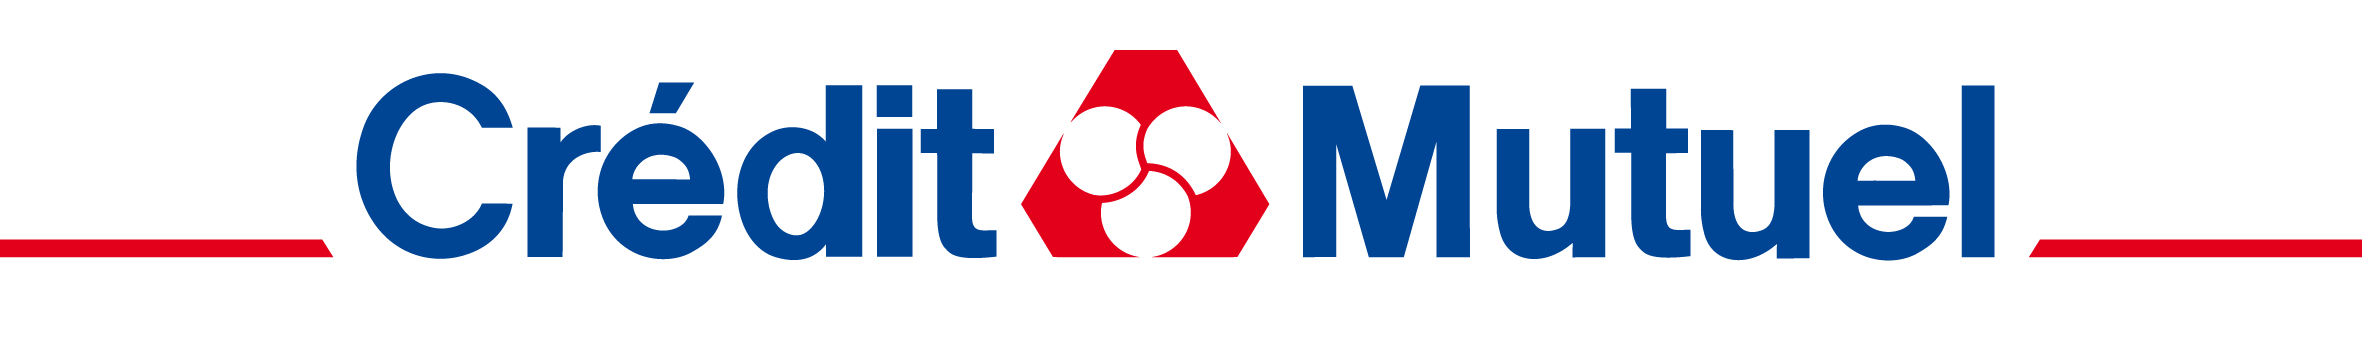 logo_CM.png